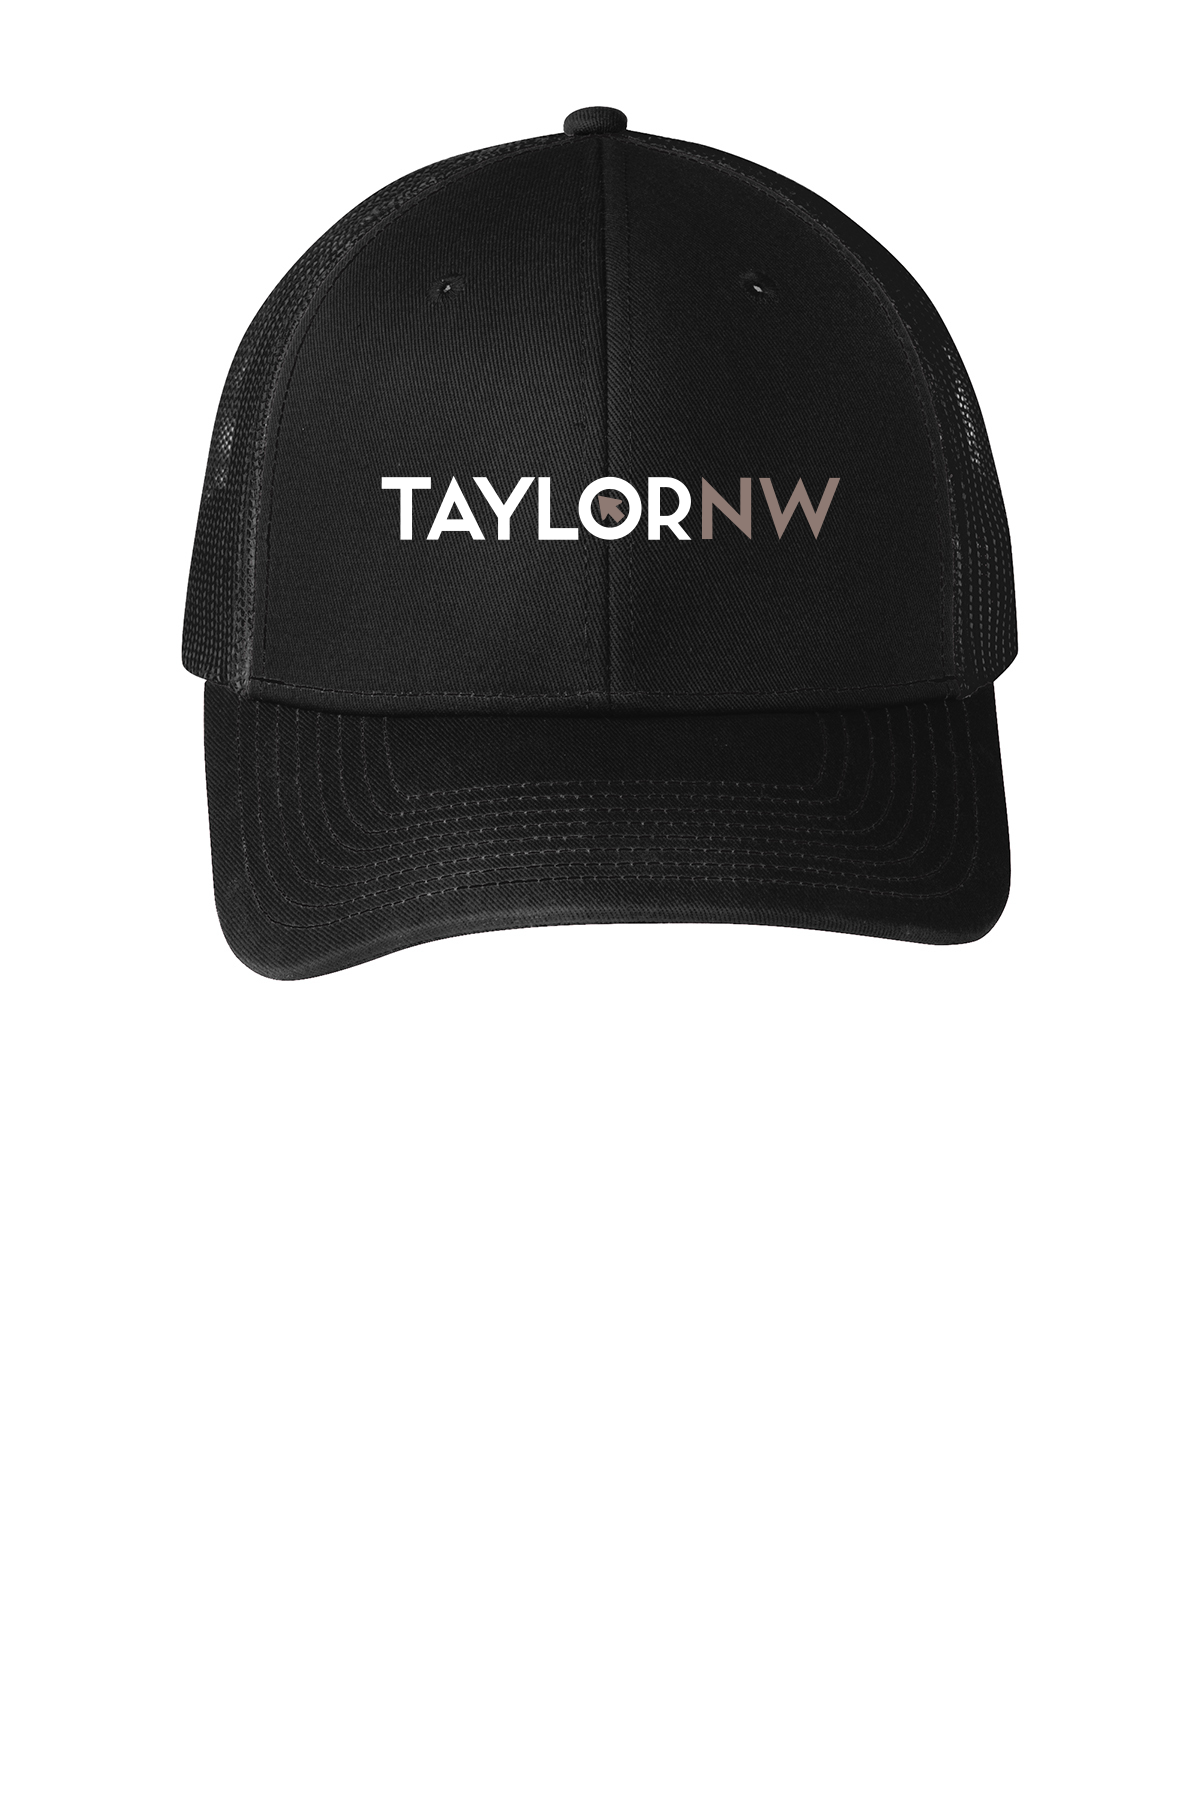 Taylor NW Snapback Trucker Cap